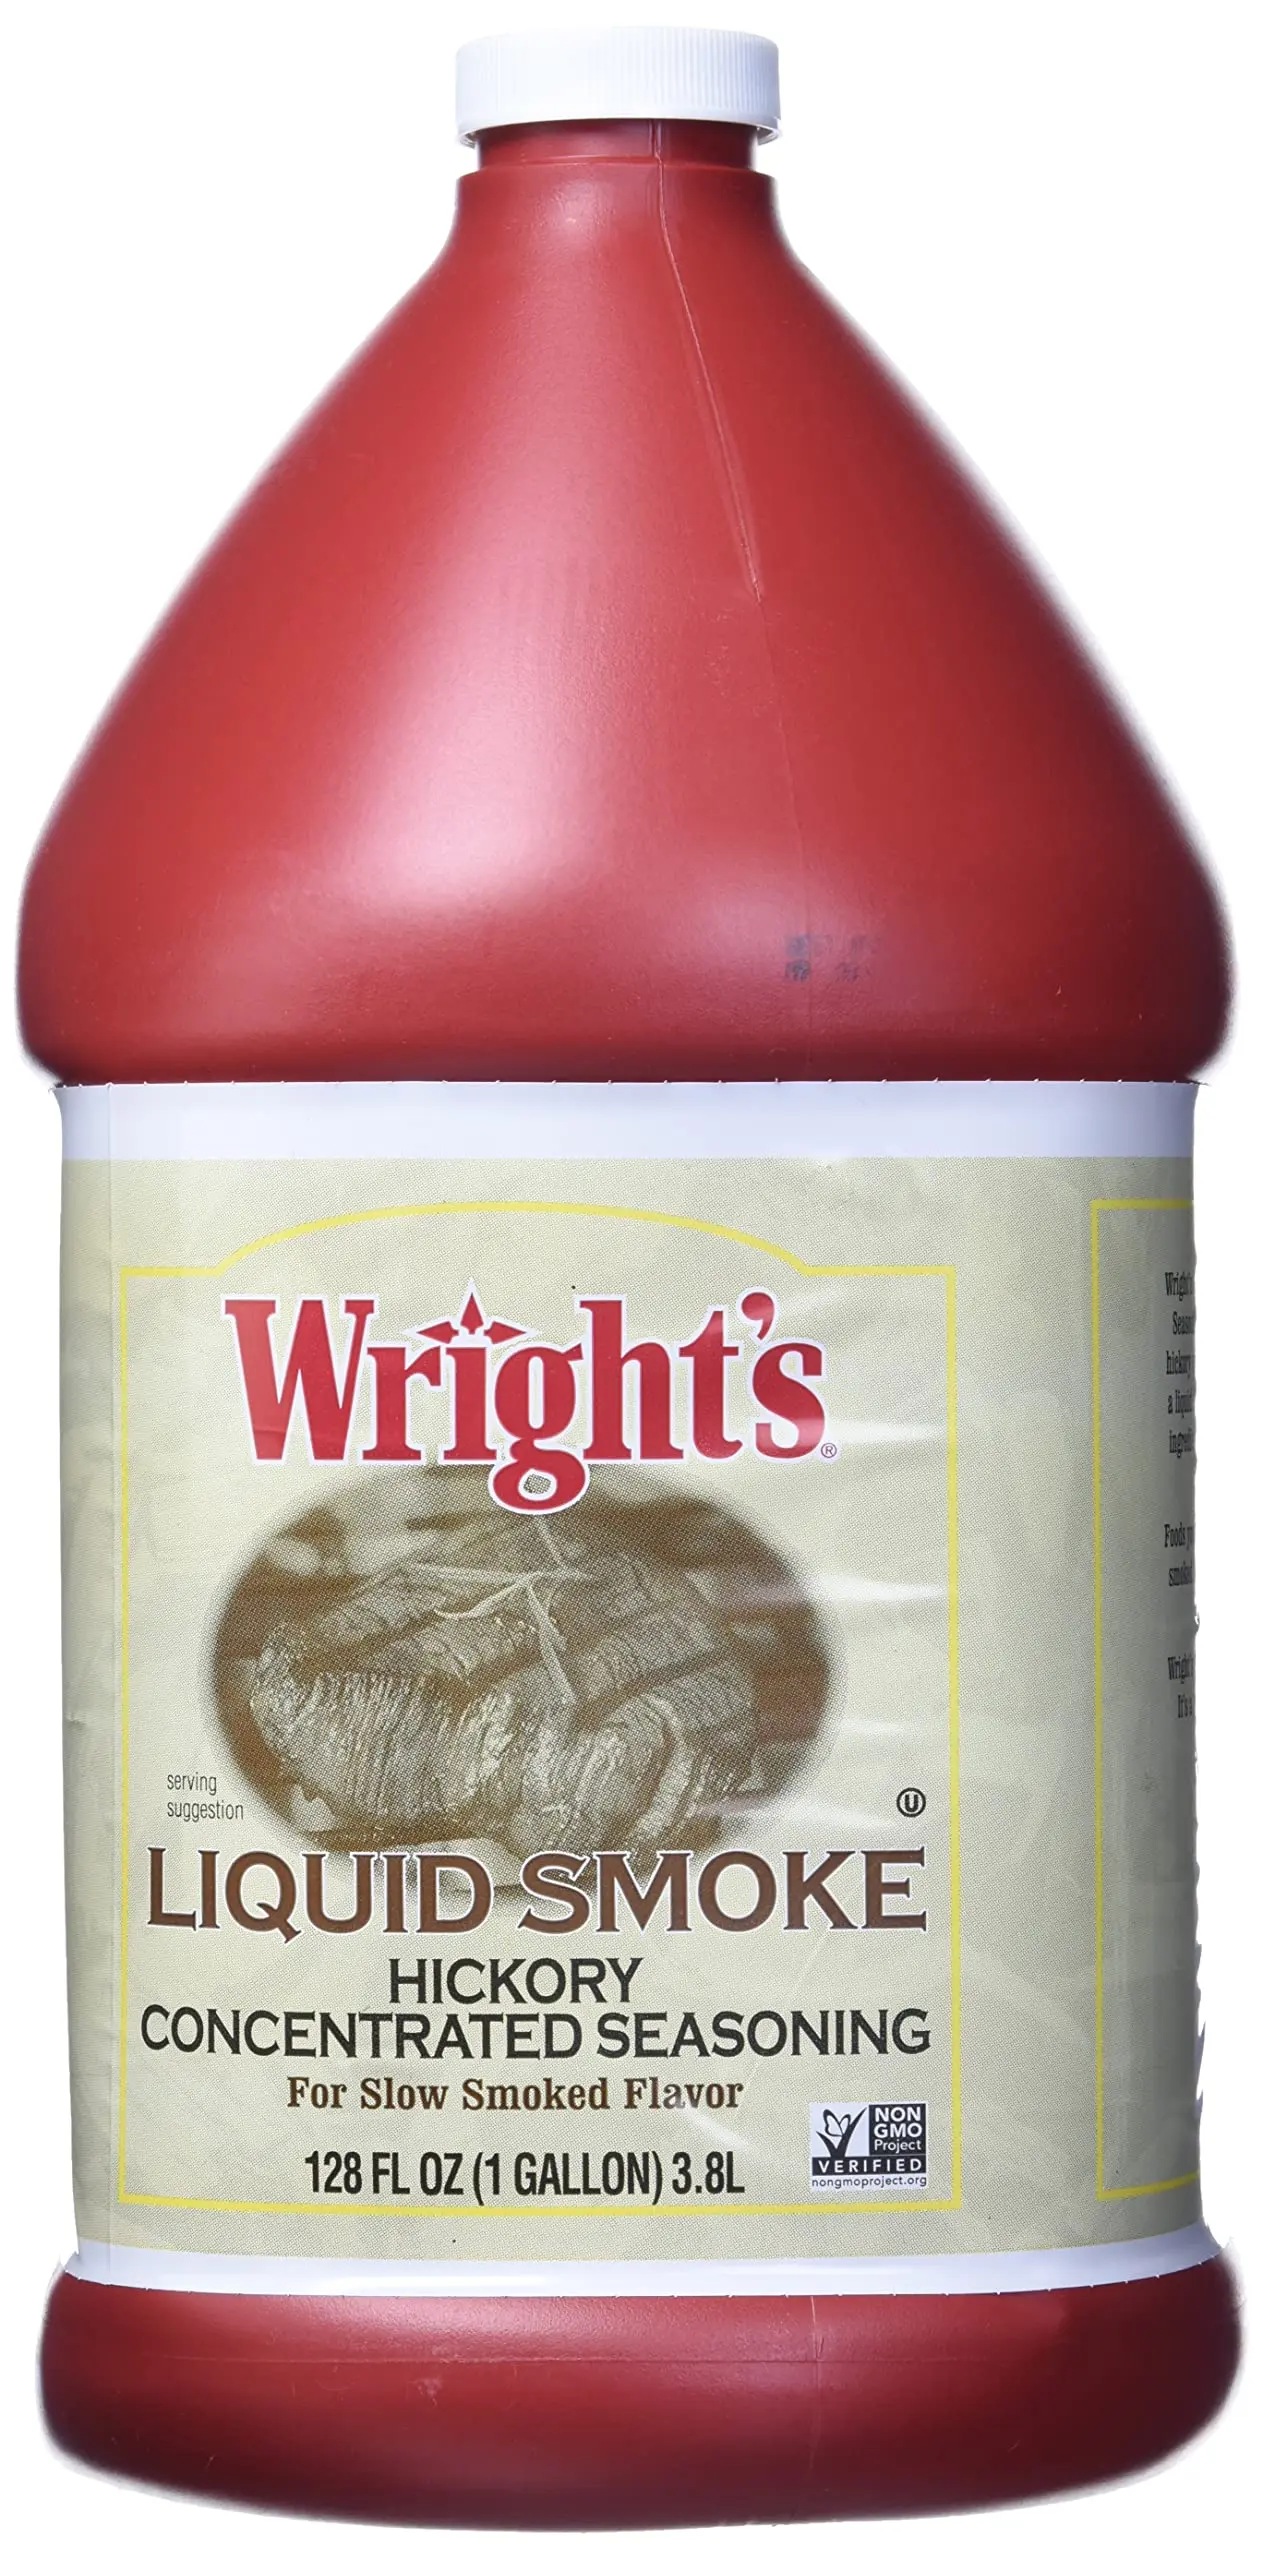 hickory smoked liquid - How do you use hickory liquid smoke extract